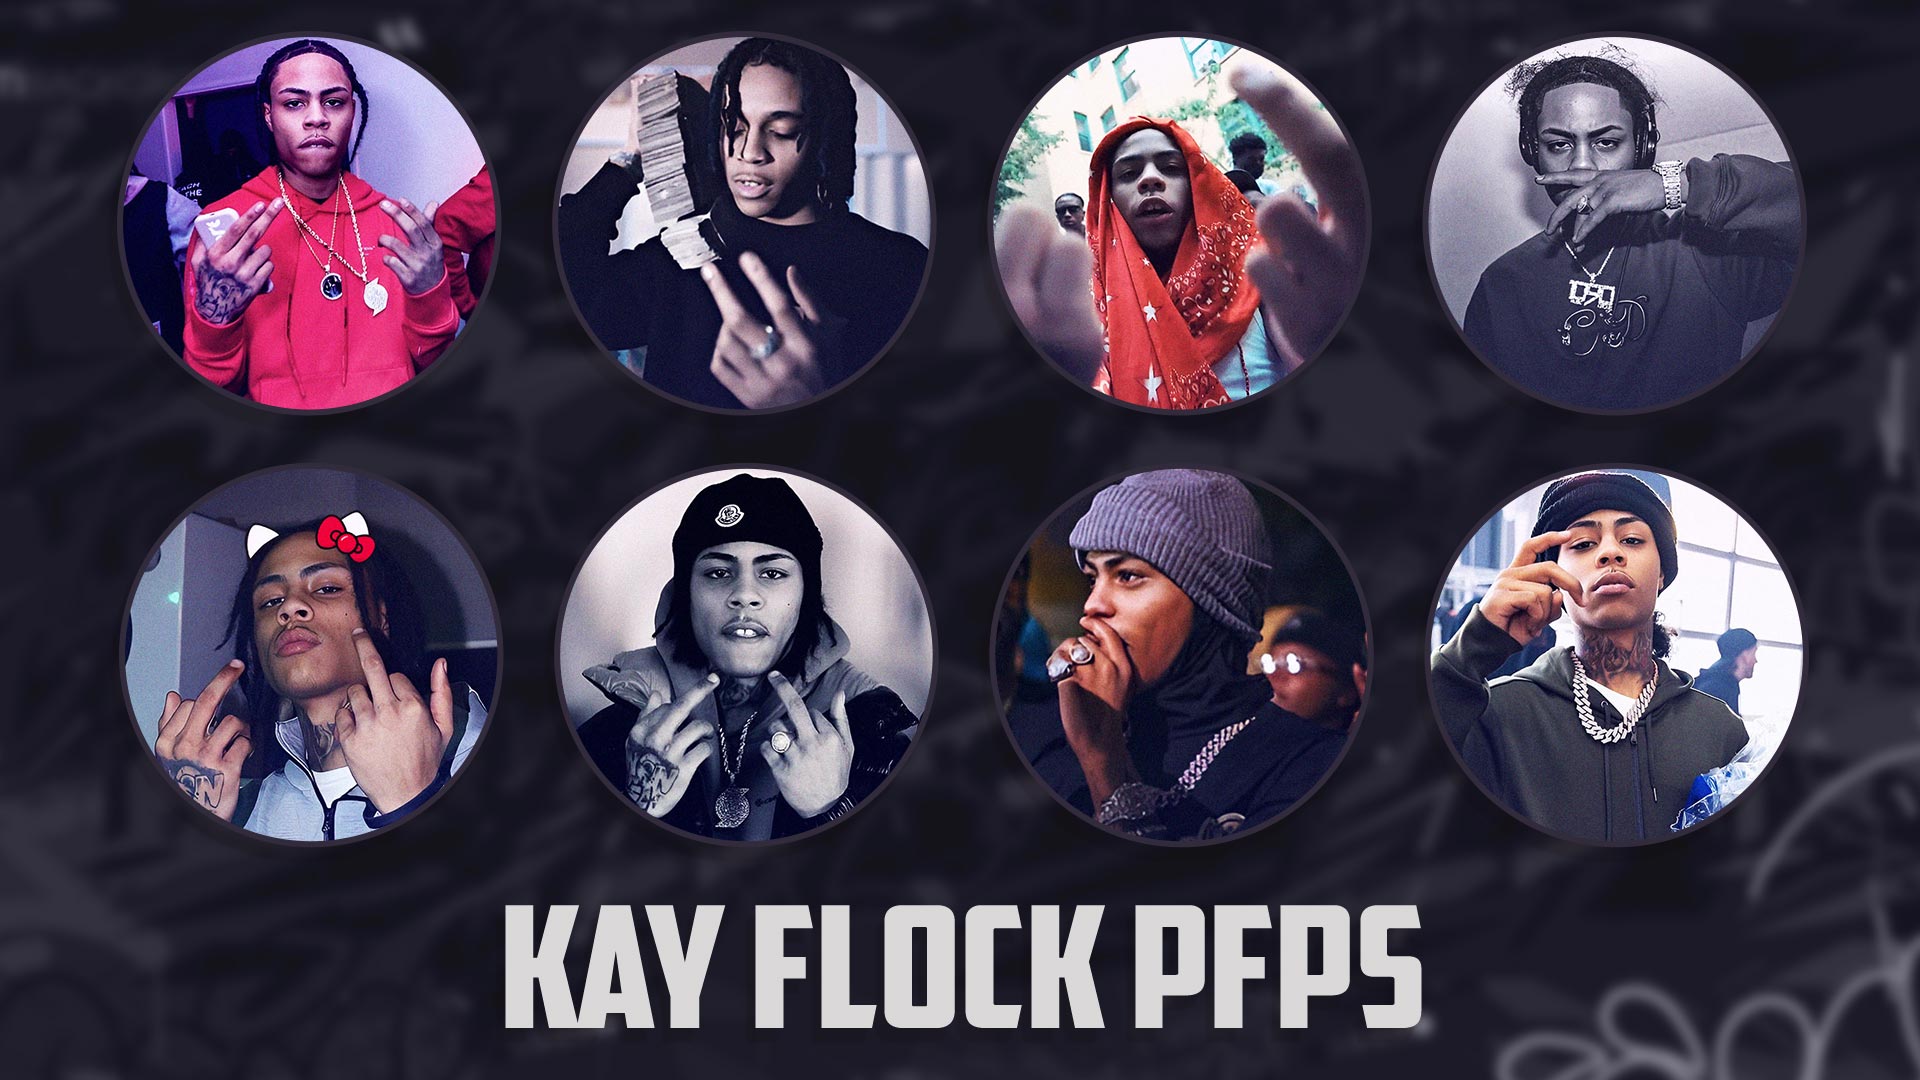 Kay Flock PFP Rappers PFP pour TikTok, Discord, Instagram, Wha